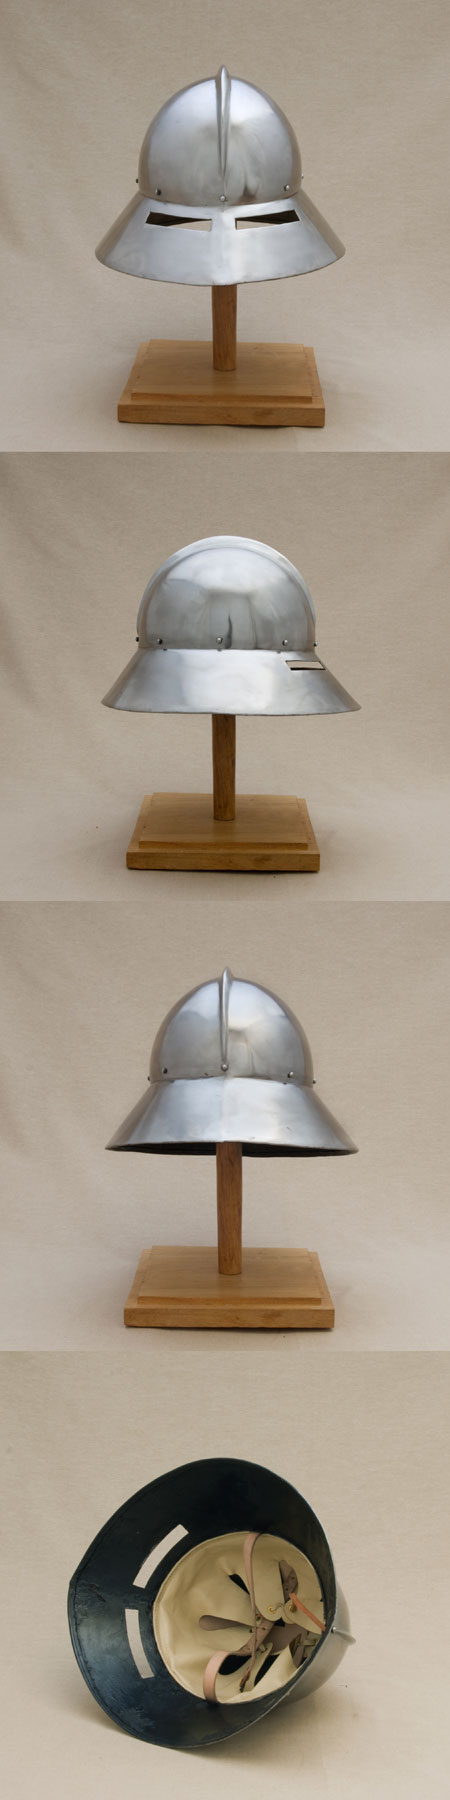 Sallet helmet, 15th century